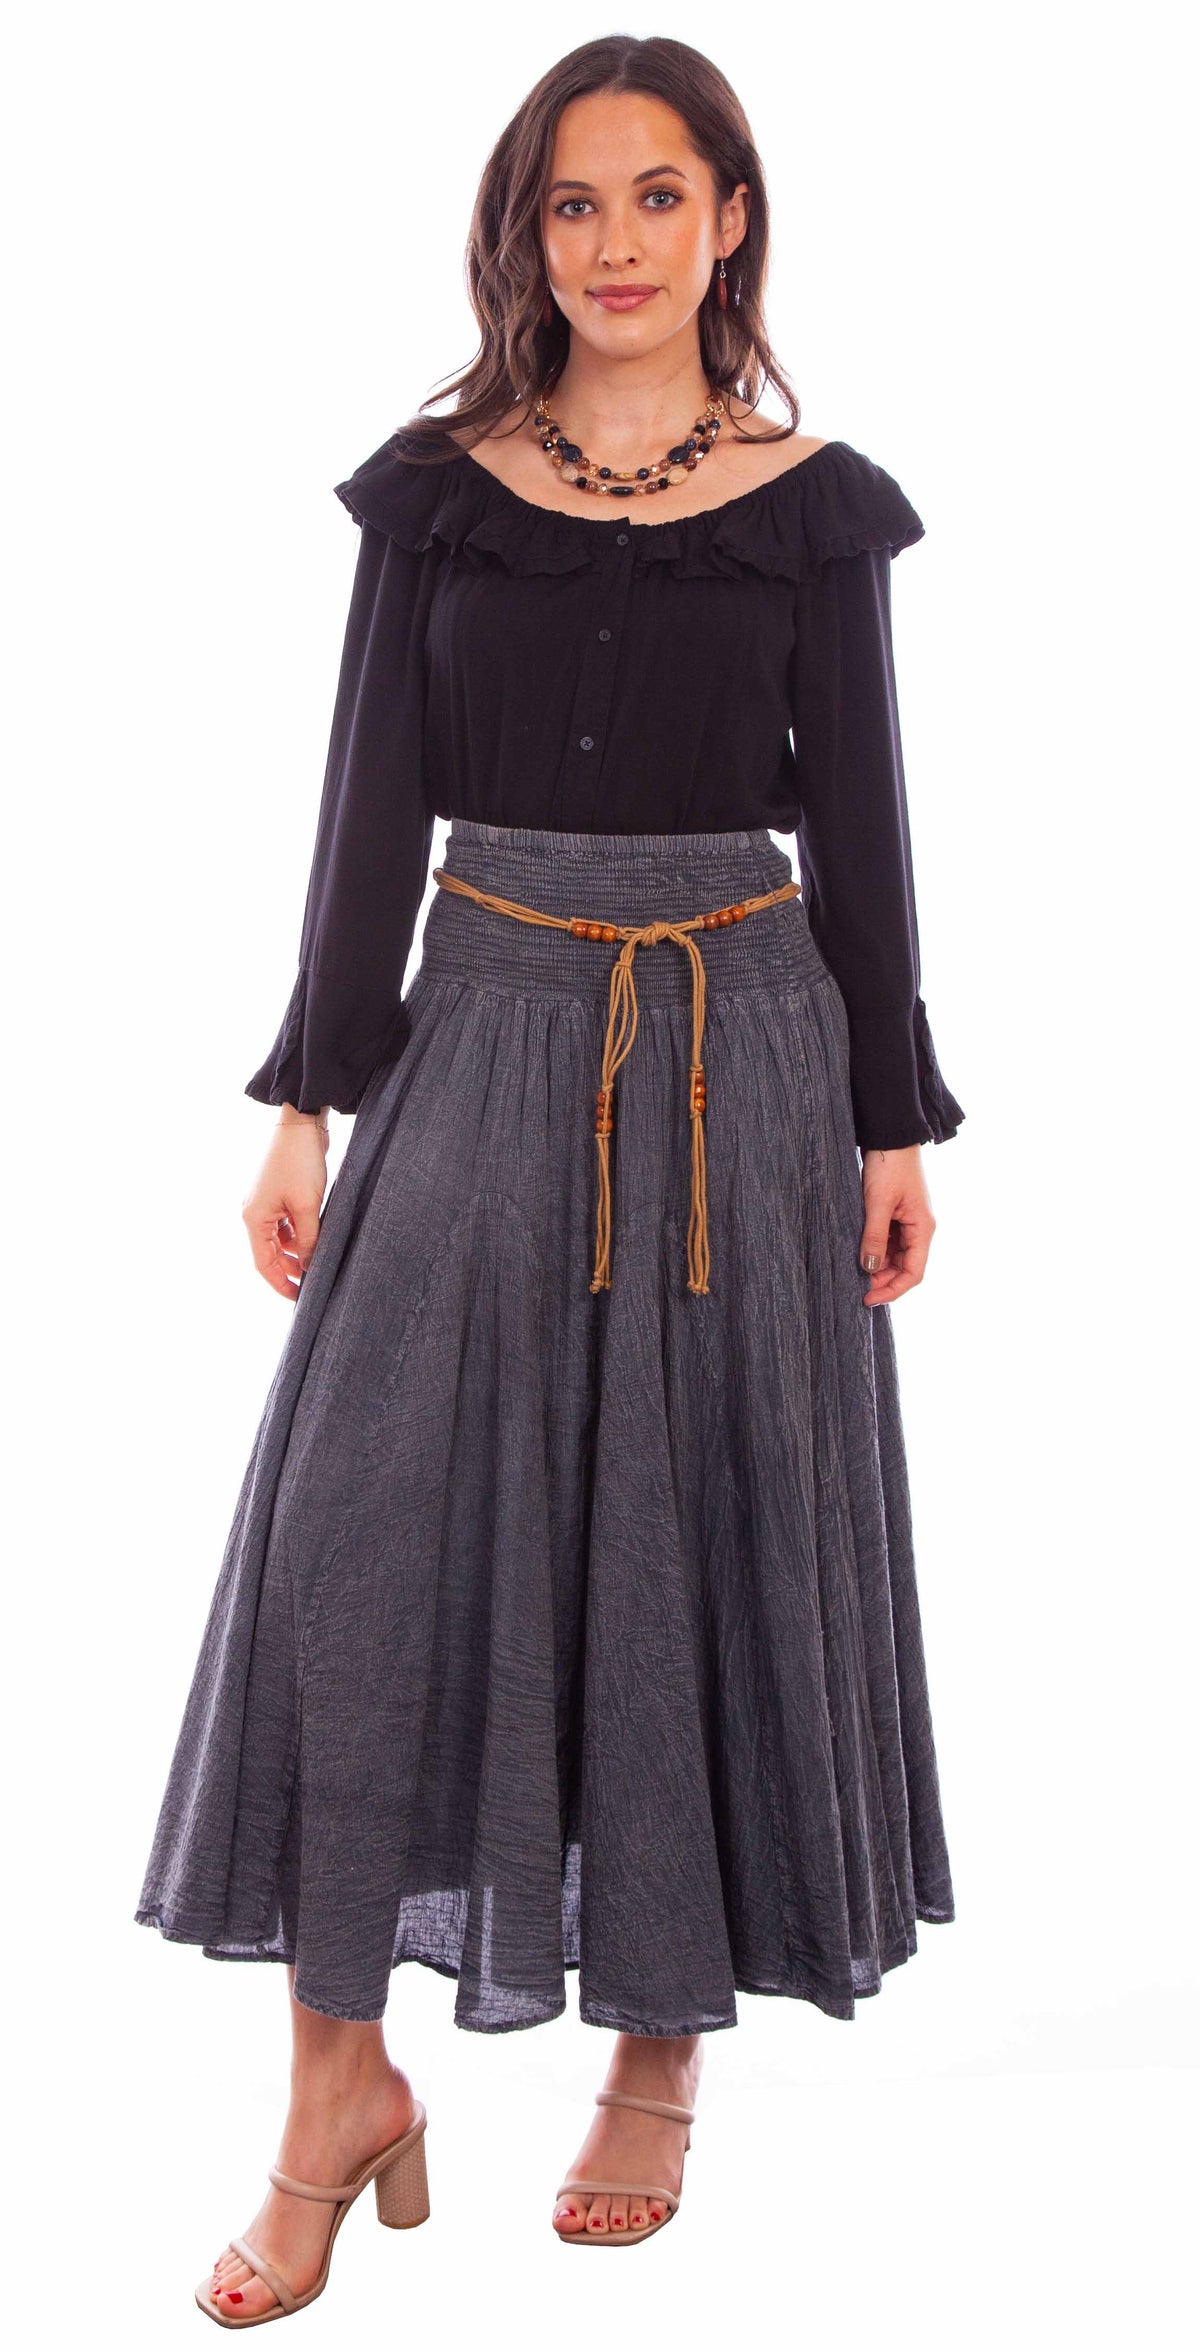 Cantina charcoal acid wash skirt w/beaded cord belt